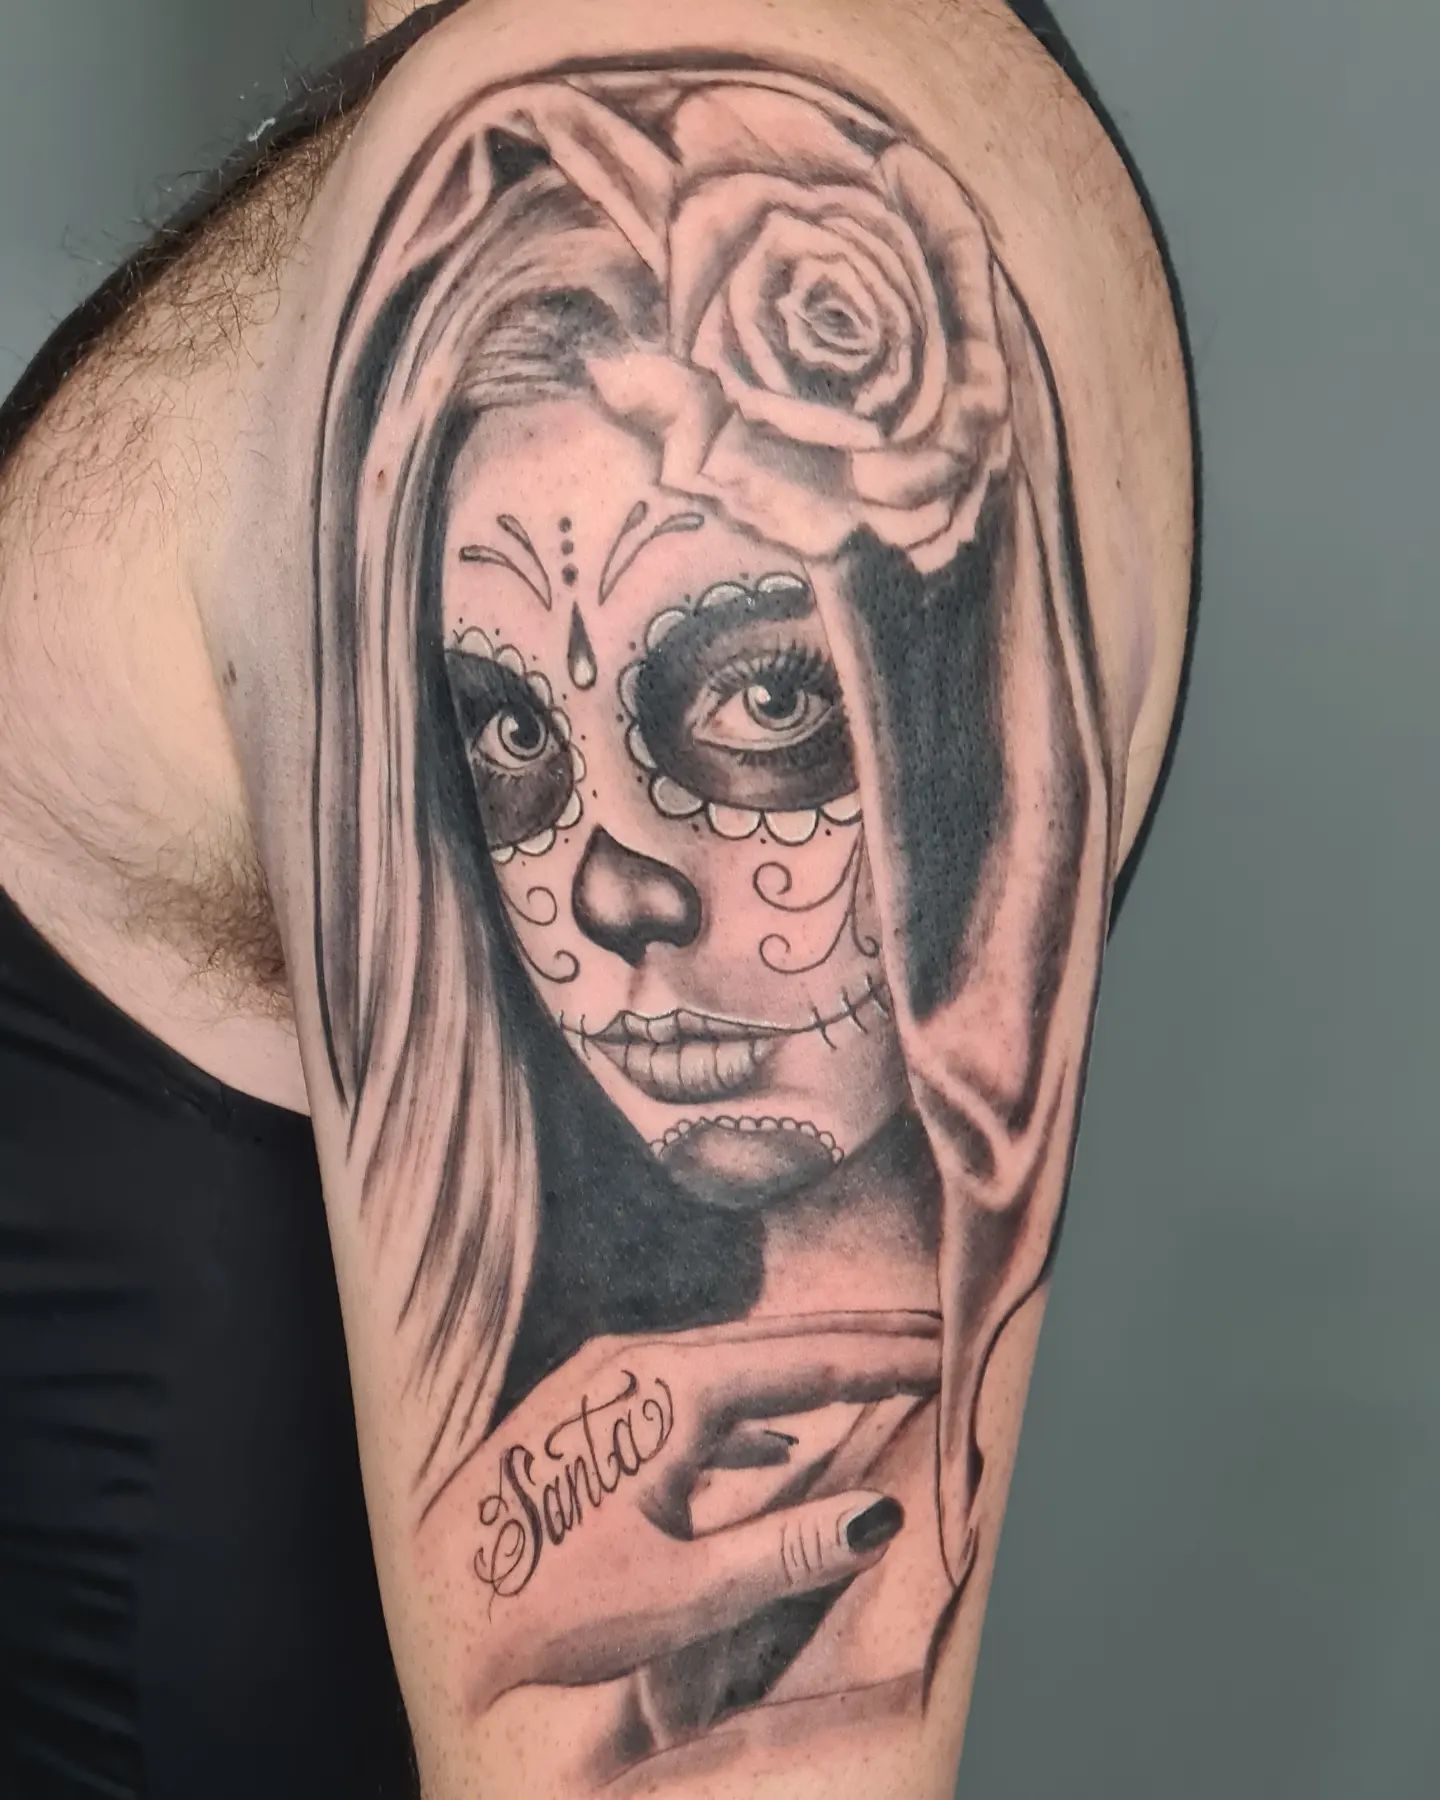 Tatuaje de Santa Muerte en el Hombro con Tinta Negra